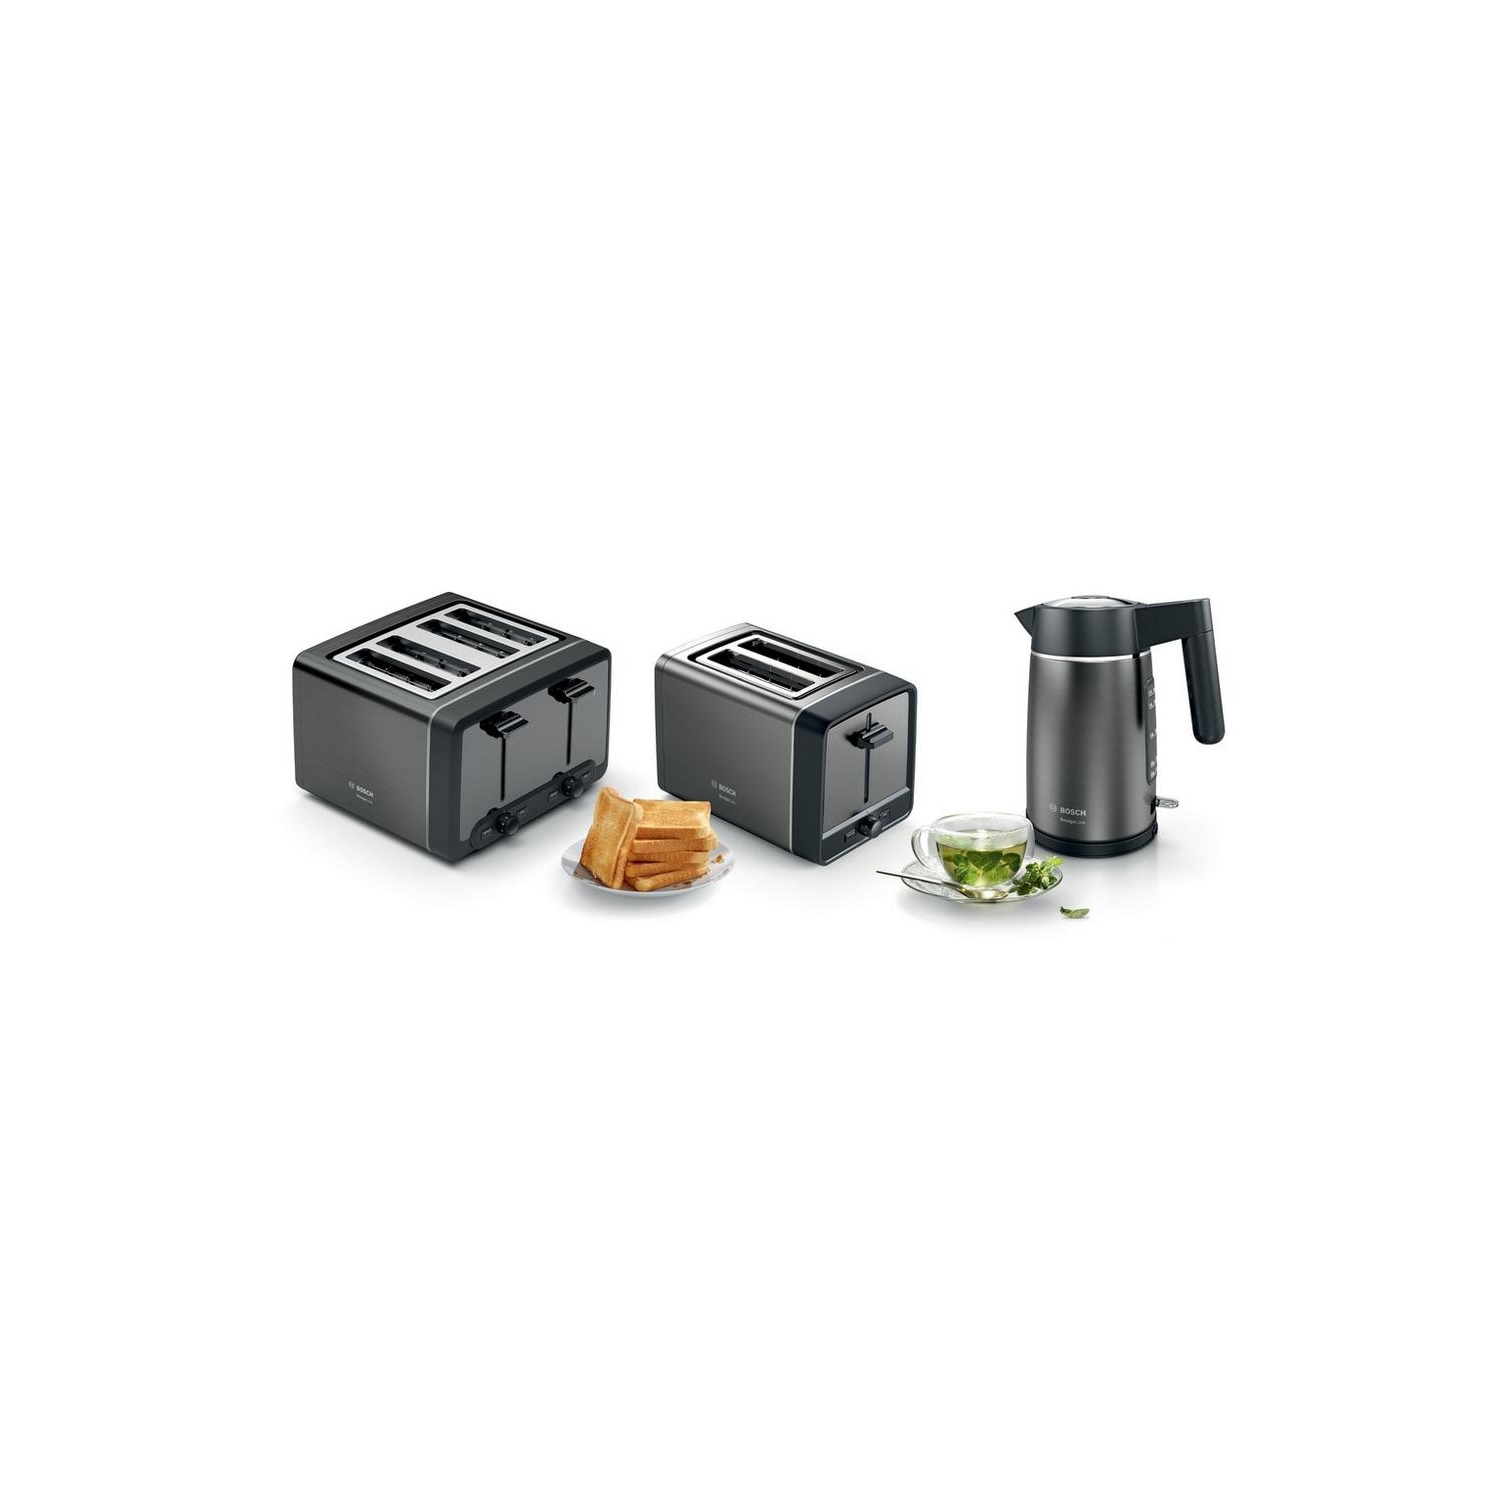 Bosch TAT5P445GB 4 Slice Toaster - Anthracite' Energy Efficient Toasting - 2